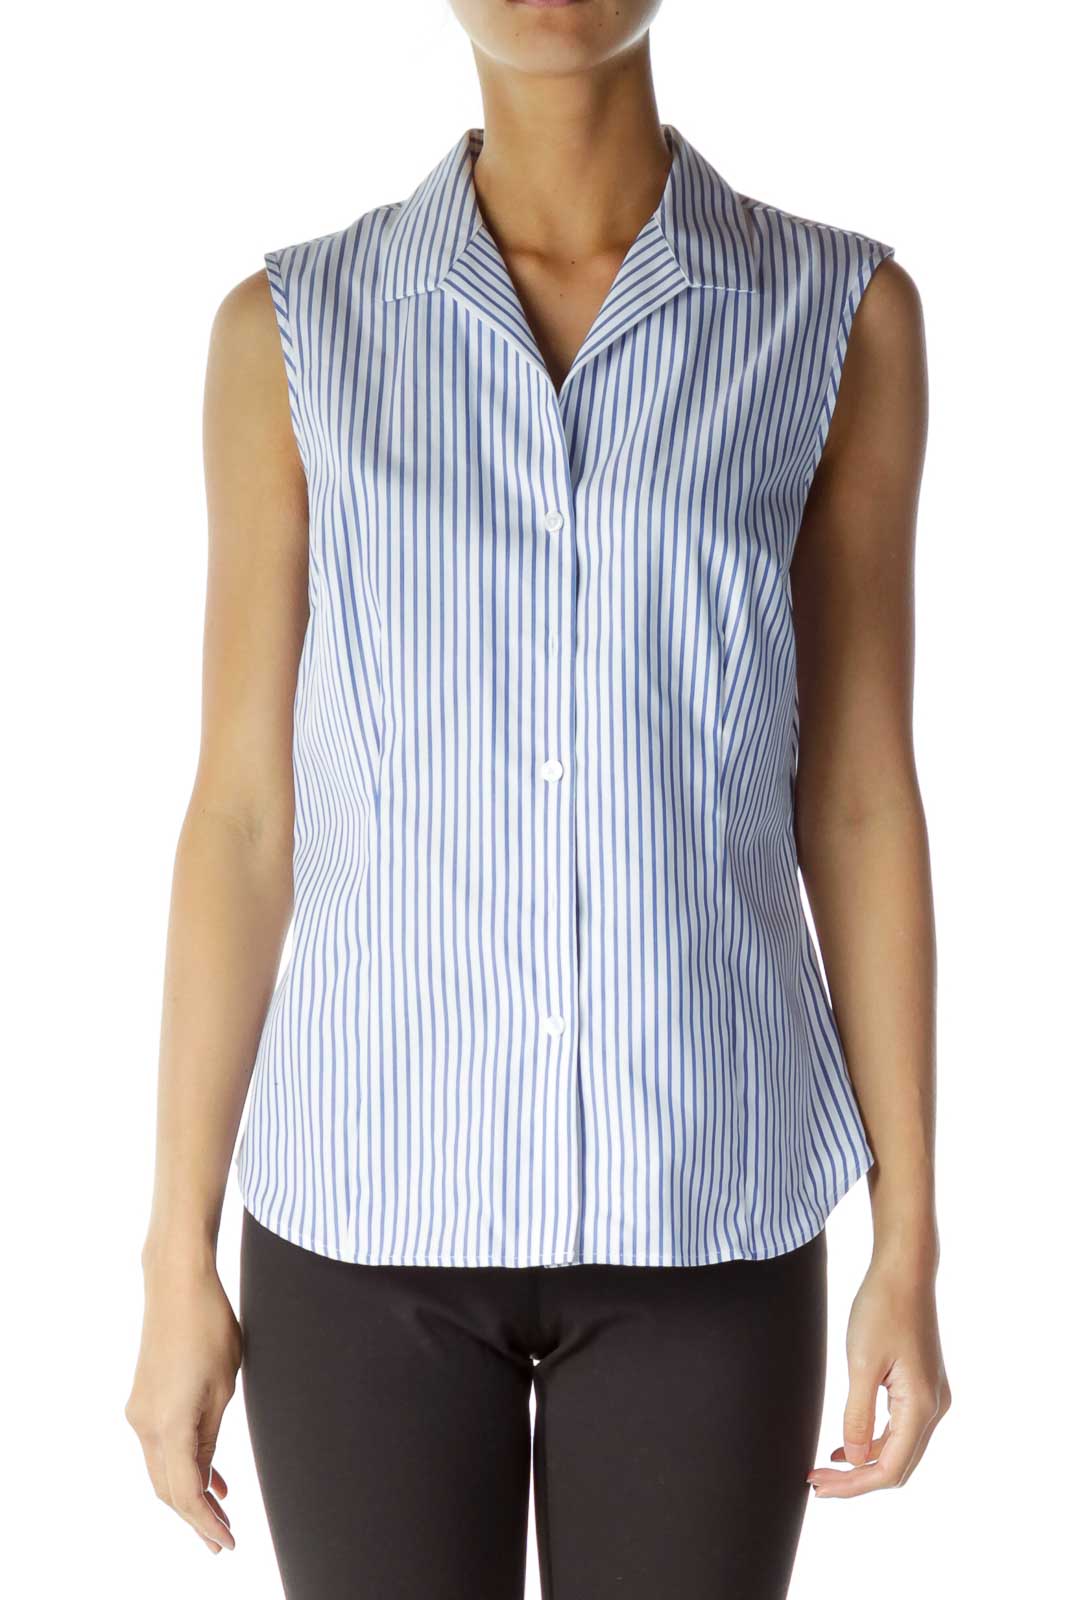 Blue White Striped Sleeveless Shirt  Front